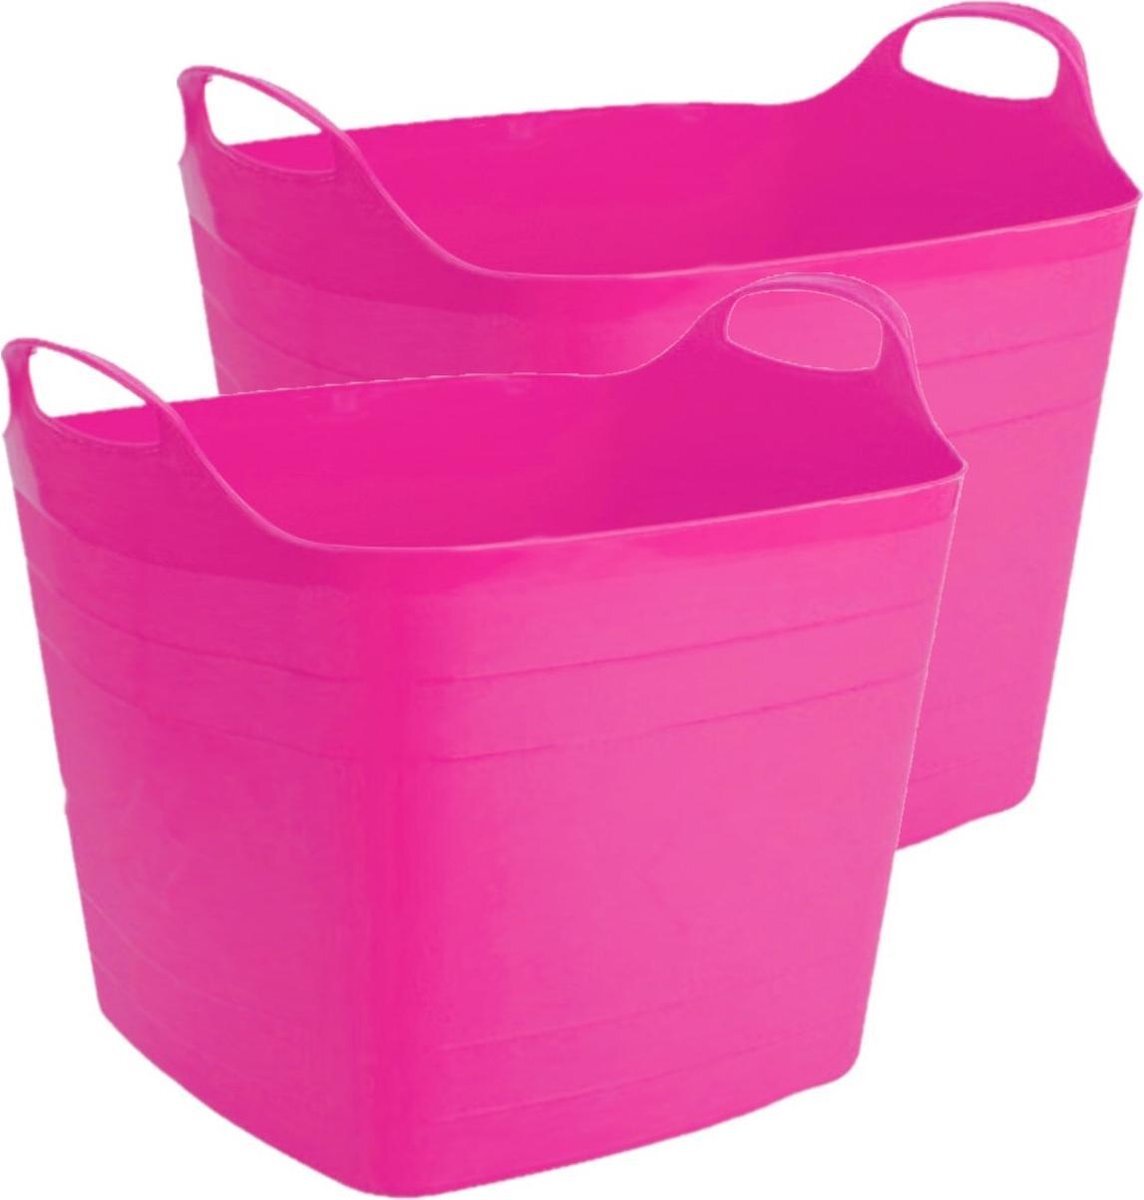 Forte Plastics 2x stuks flexibele kuip emmer/wasmand vierkant fuchsia roze 40 liter - Opbergmanden